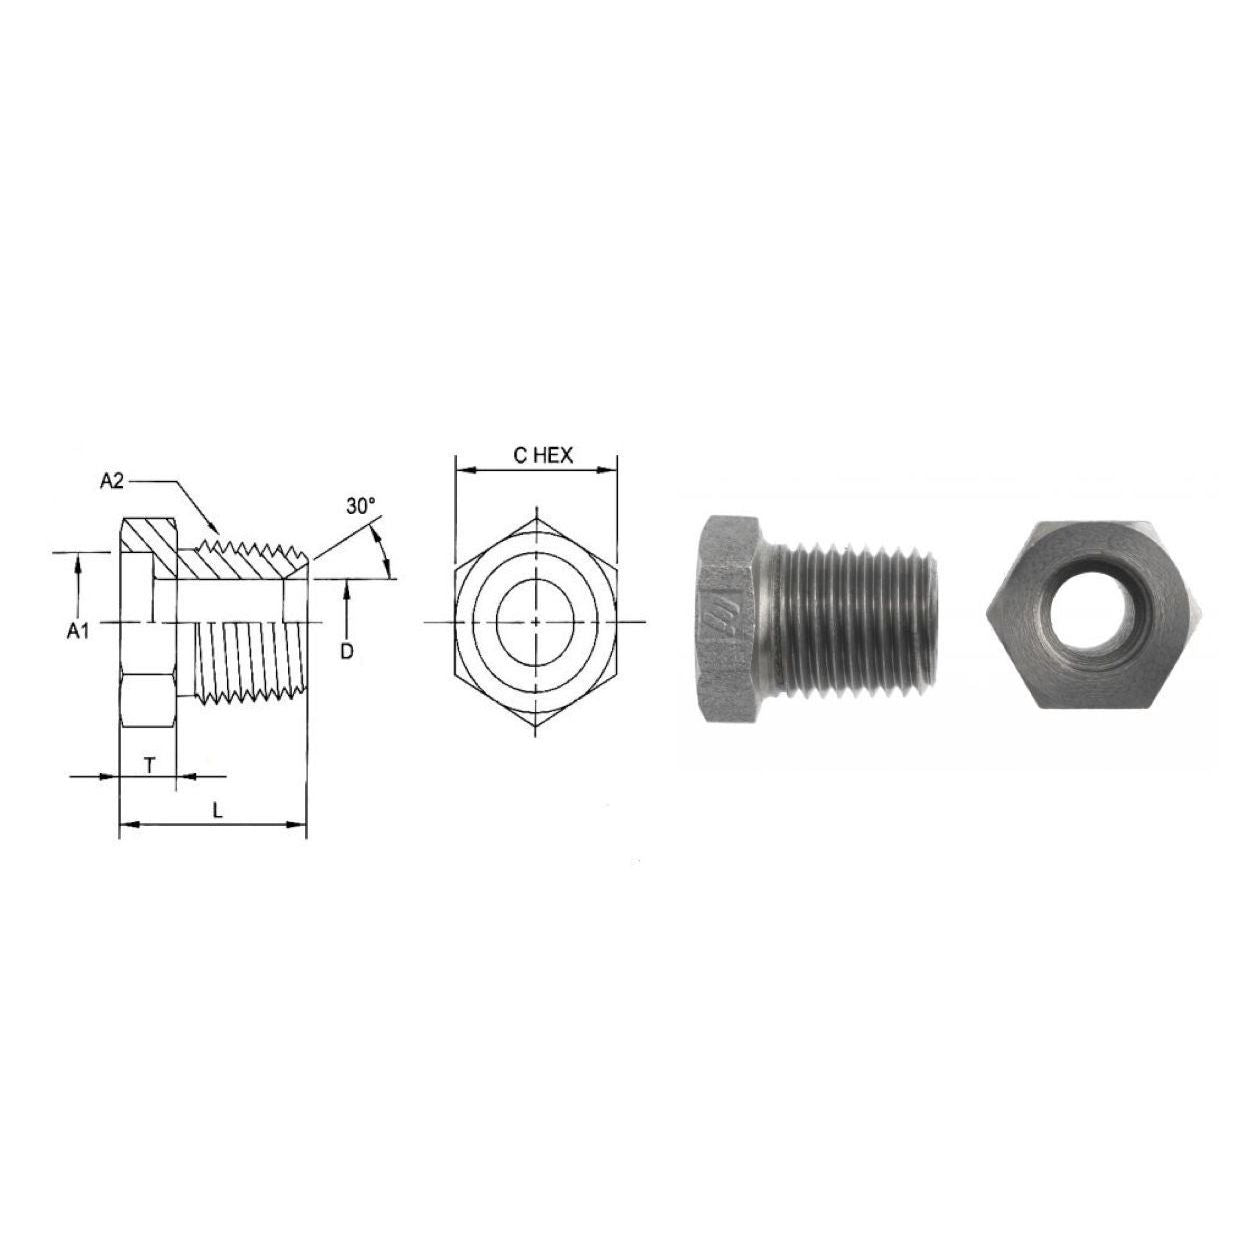 0404-20-16 : OneHydraulics 1.25 (1-1/4) Bore x 1 Male NPT Straight Plug, Steel